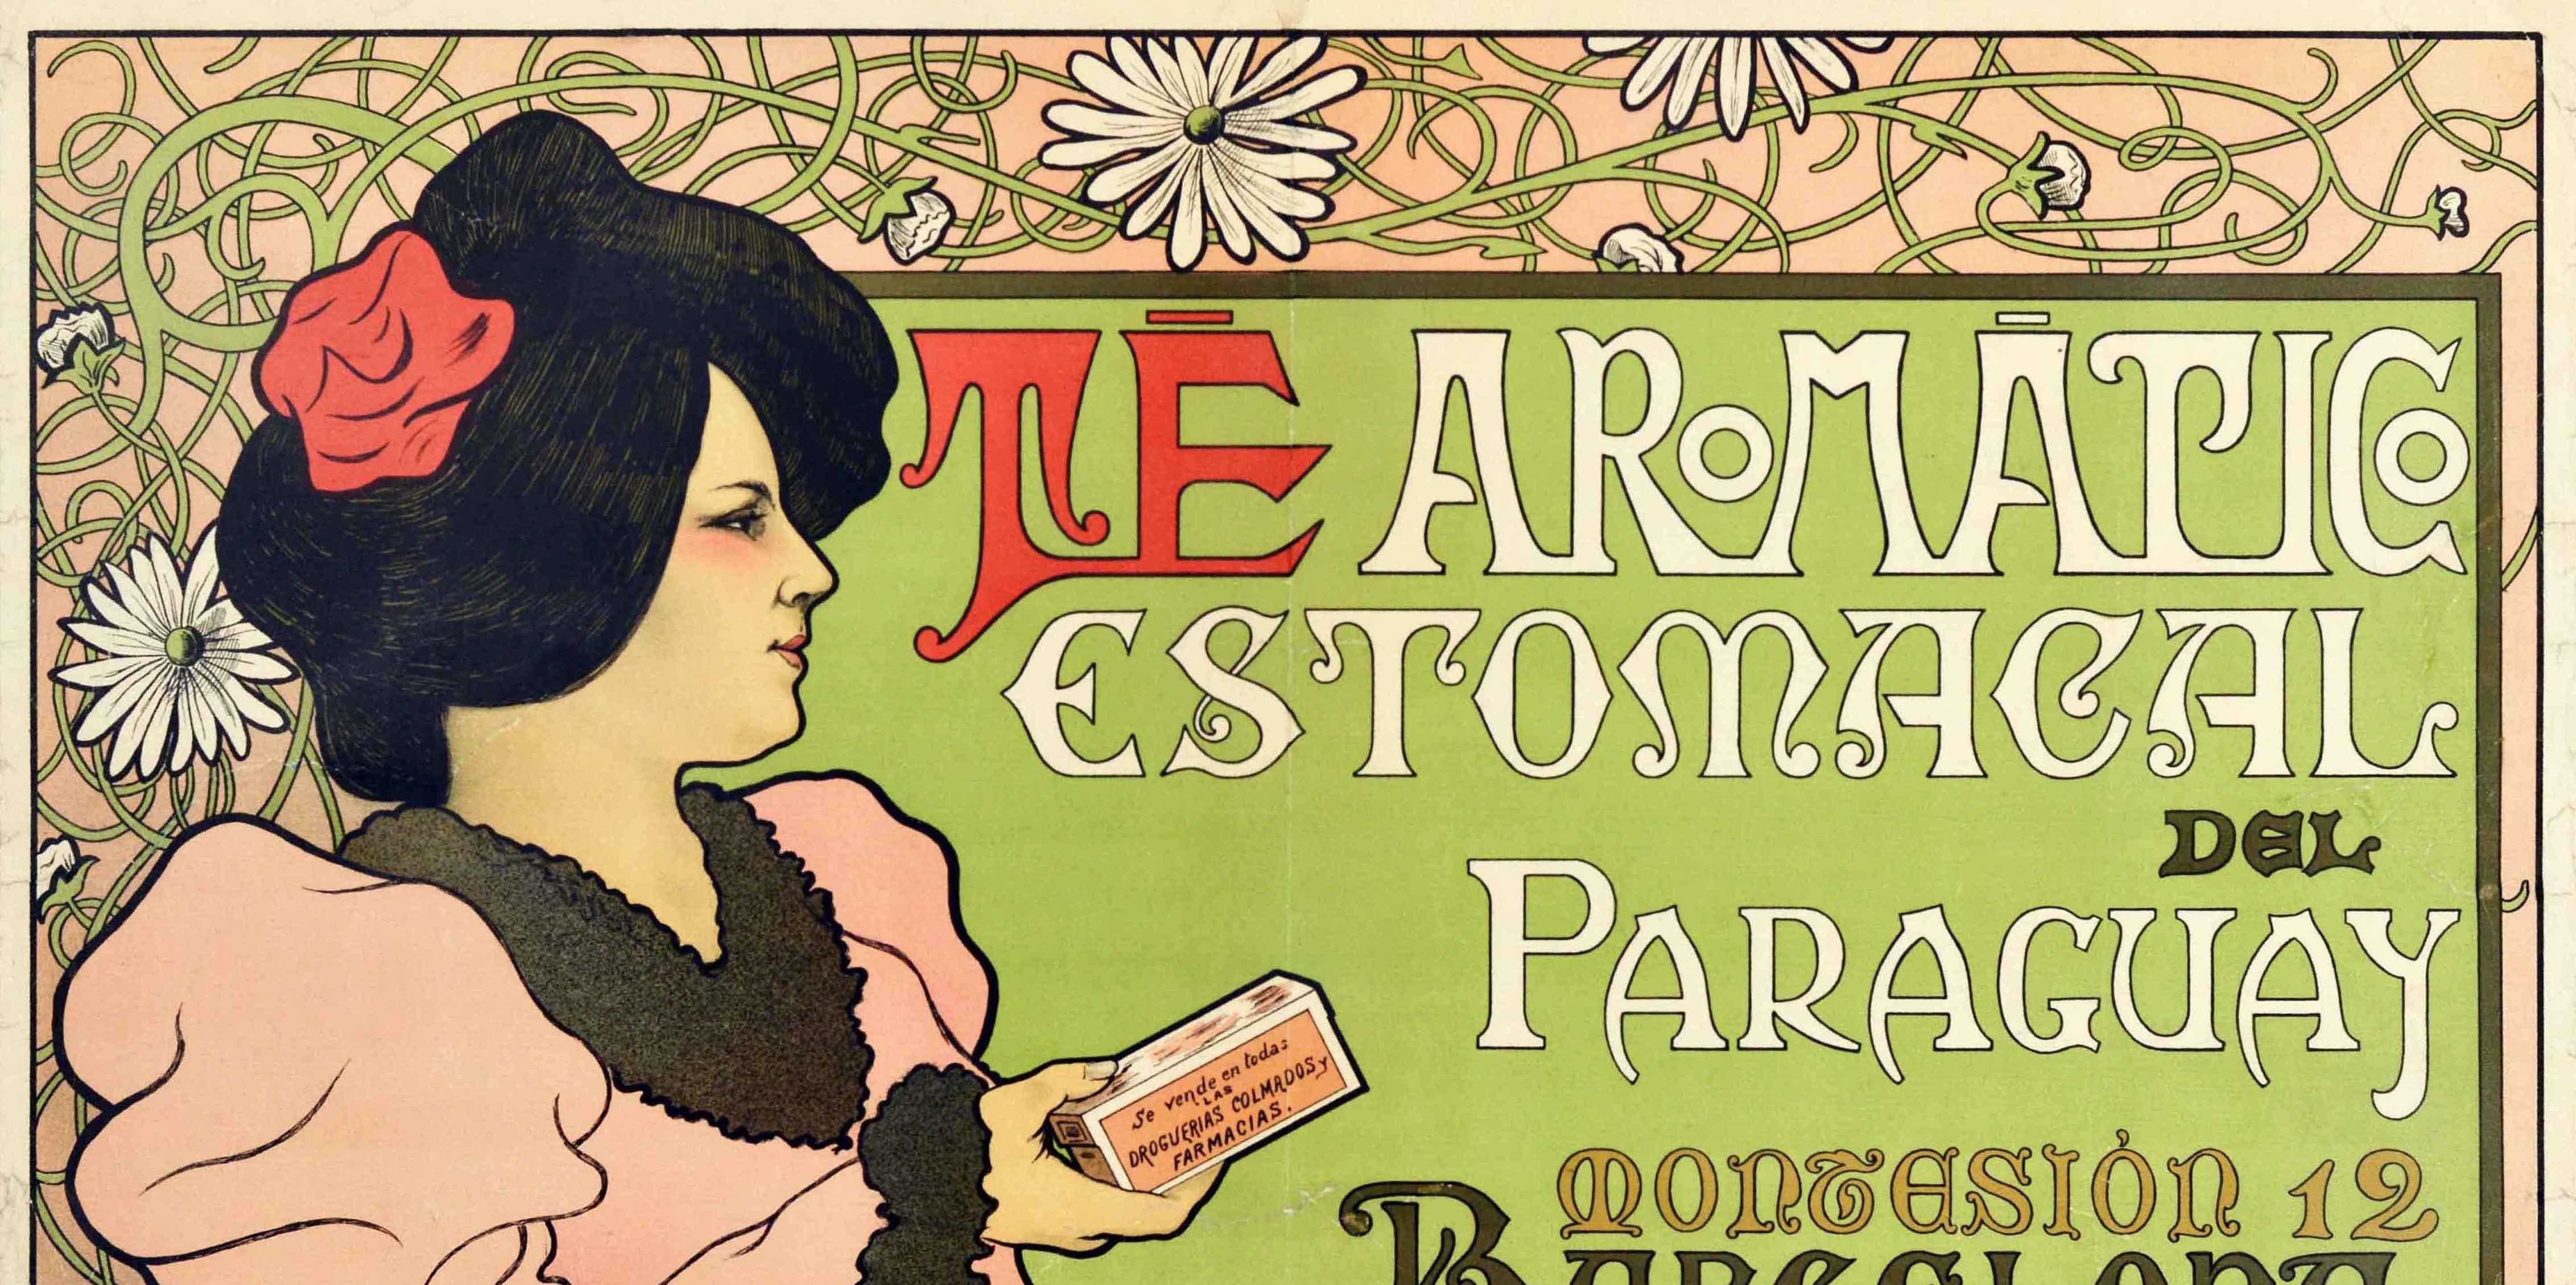 Art Nouveau Original Antique Poster Te Aromatico Estomacal Del Paraguay Aromatic Tea Drink